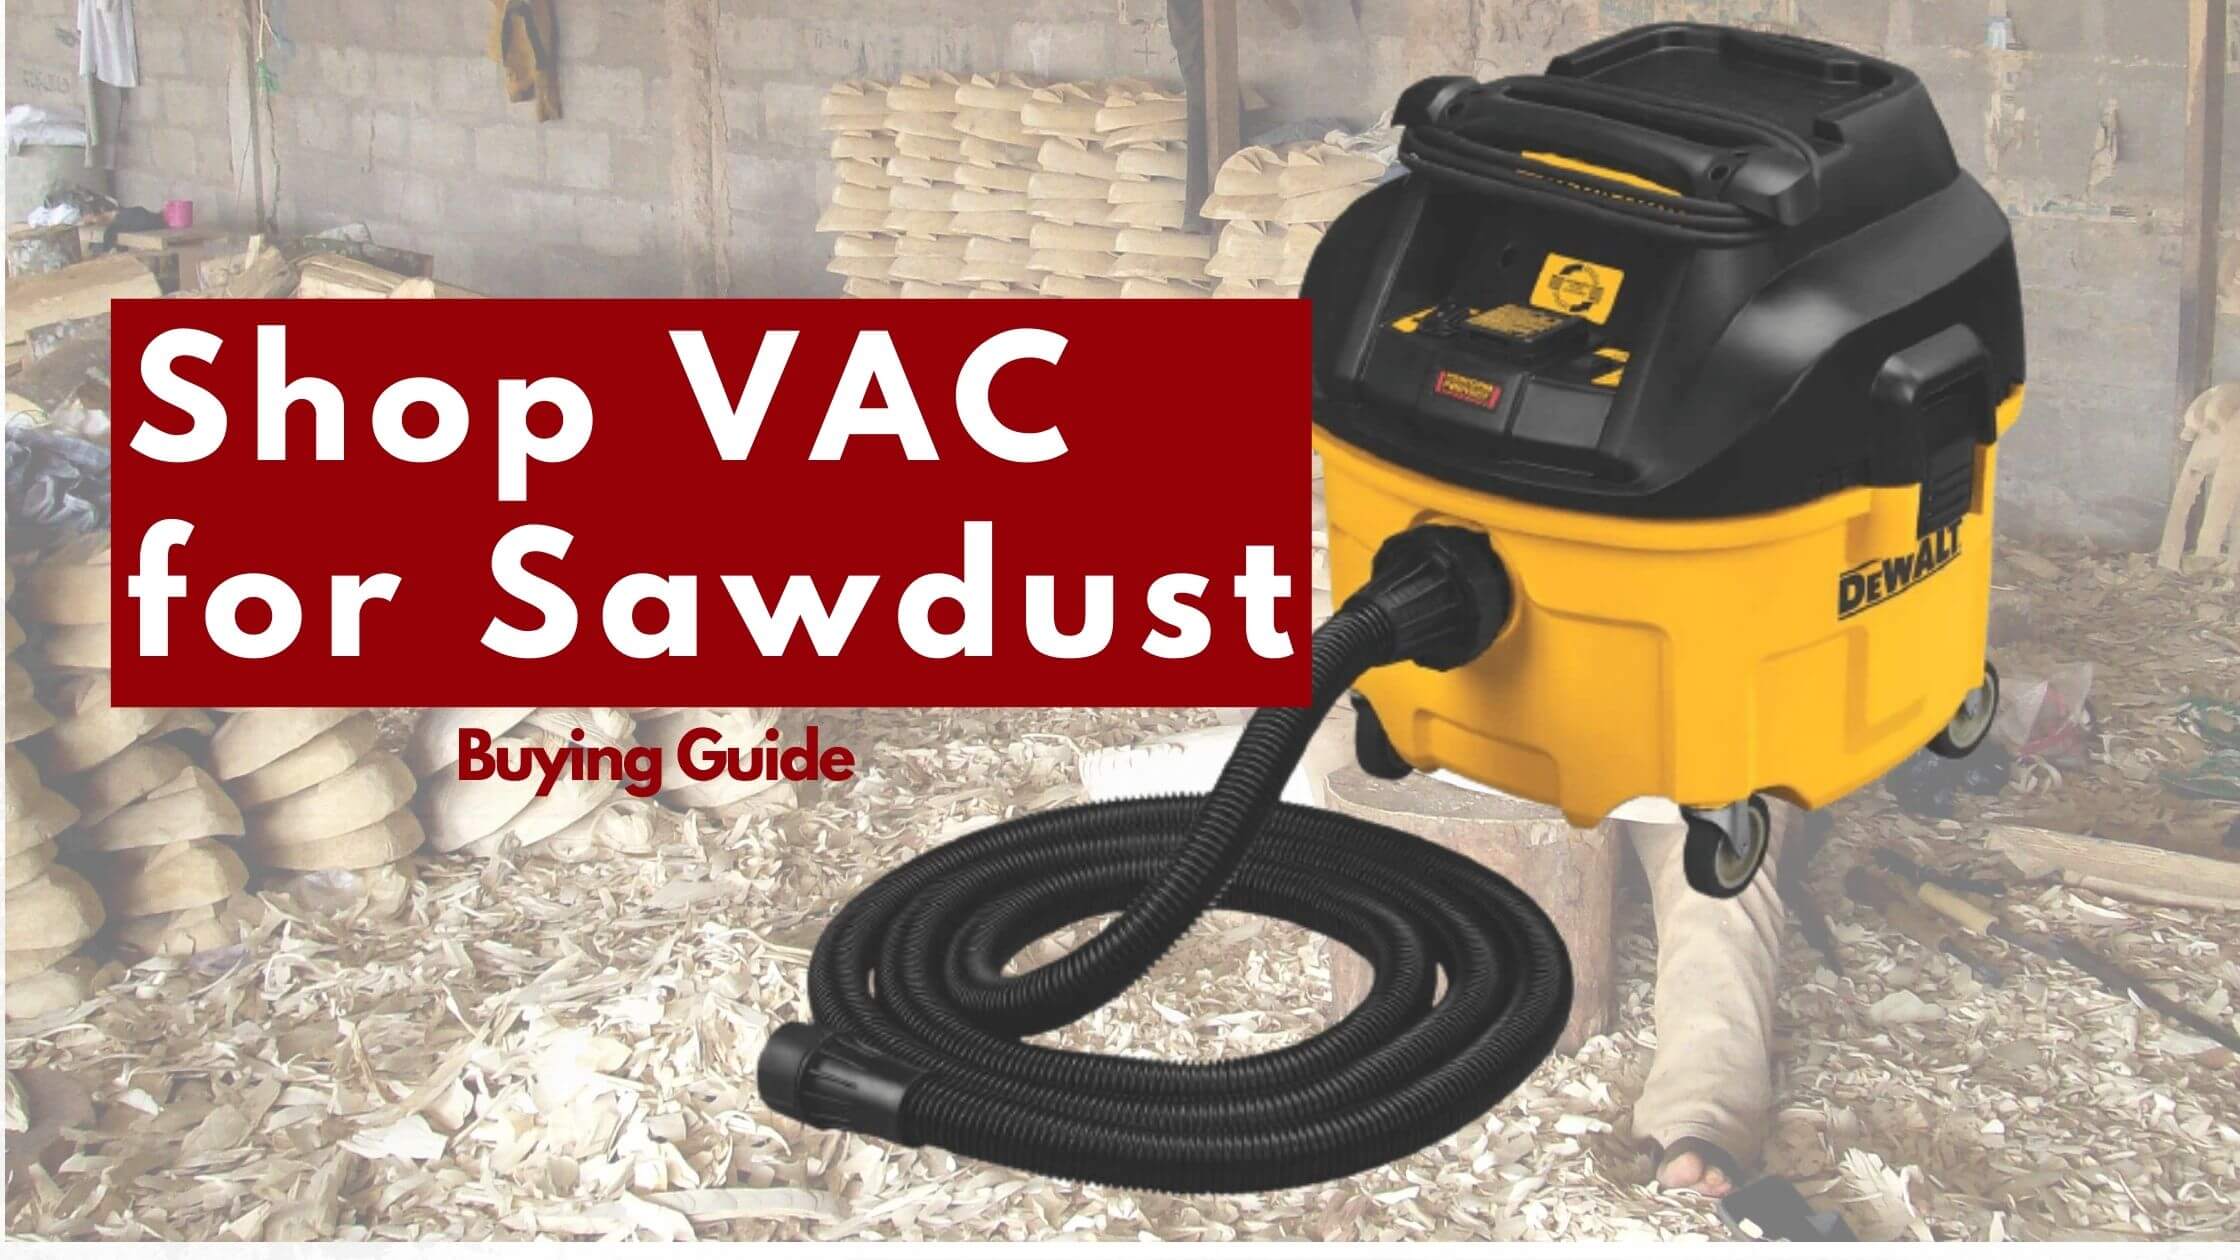 Best Shop VAC for Sawdust - DEWALT DWV010 8-Gallon - Dust Extractor Review